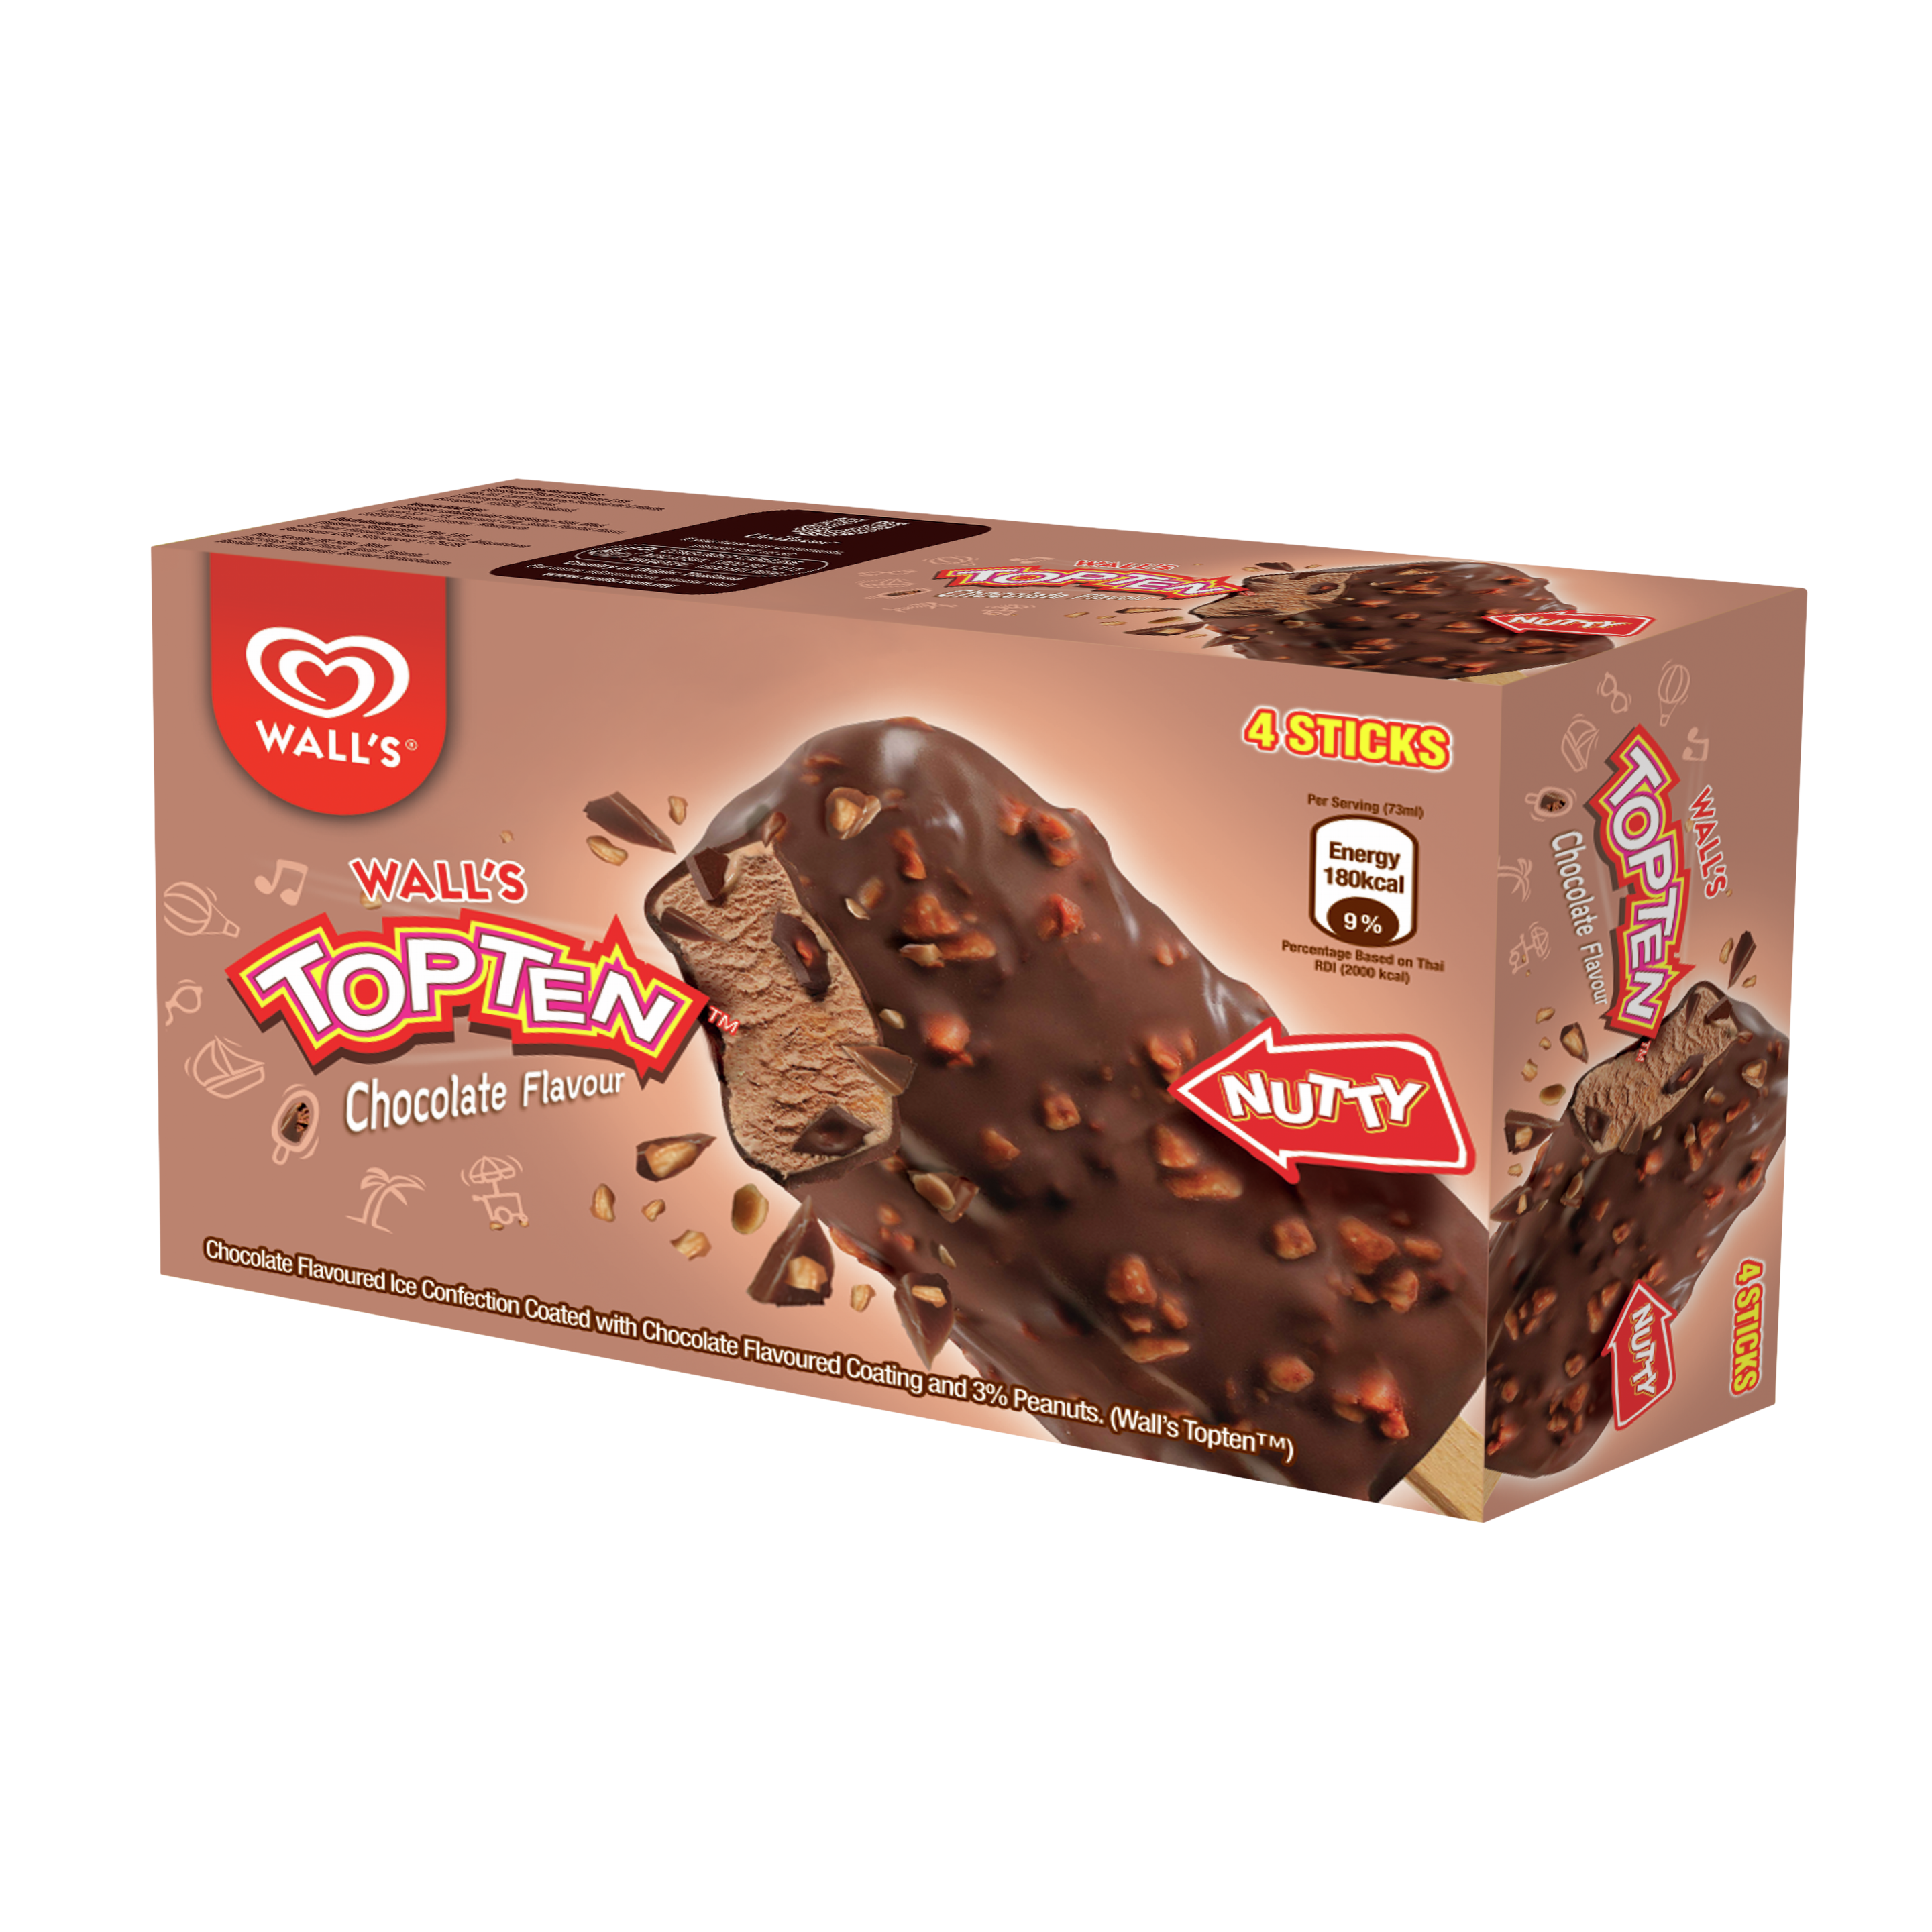 Wall's Top Ten Chocolate Multipack